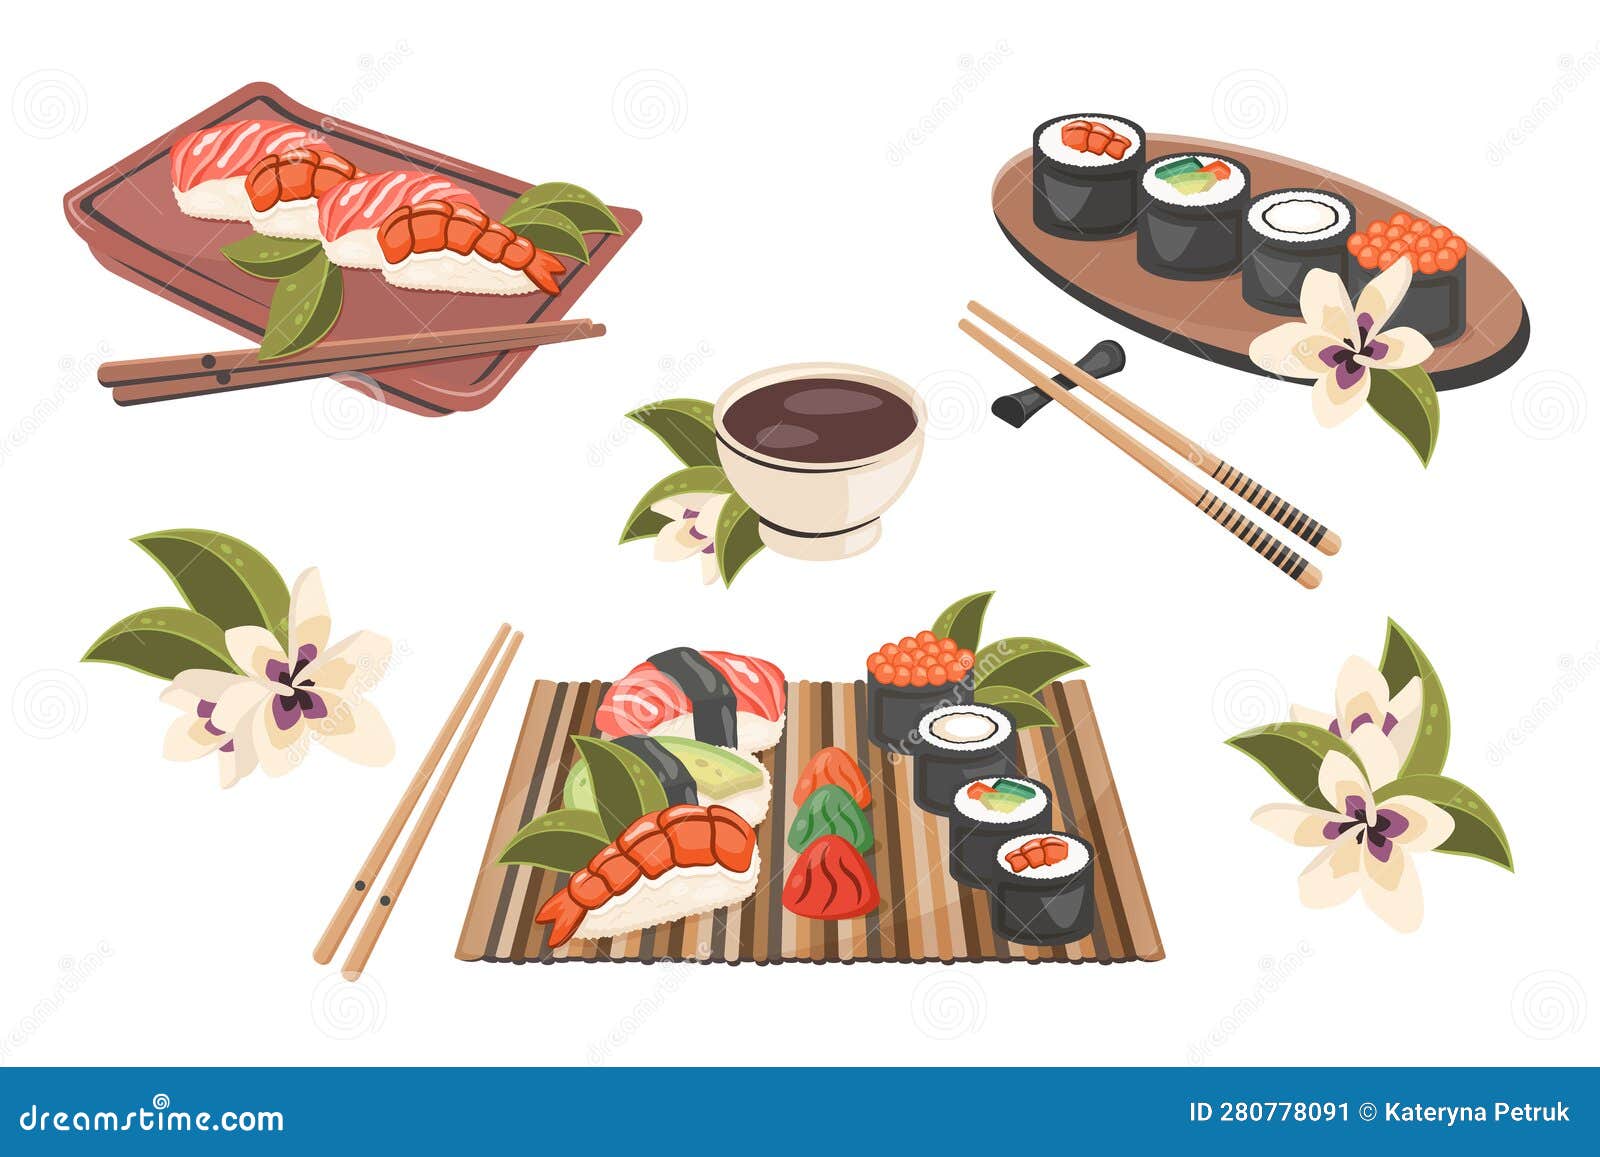 https://thumbs.dreamstime.com/z/set-japanese-national-food-isolated-nigiri-sushi-maki-fish-shrimp-seafood-collection-oriental-dish-closeup-chopsticks-280778091.jpg